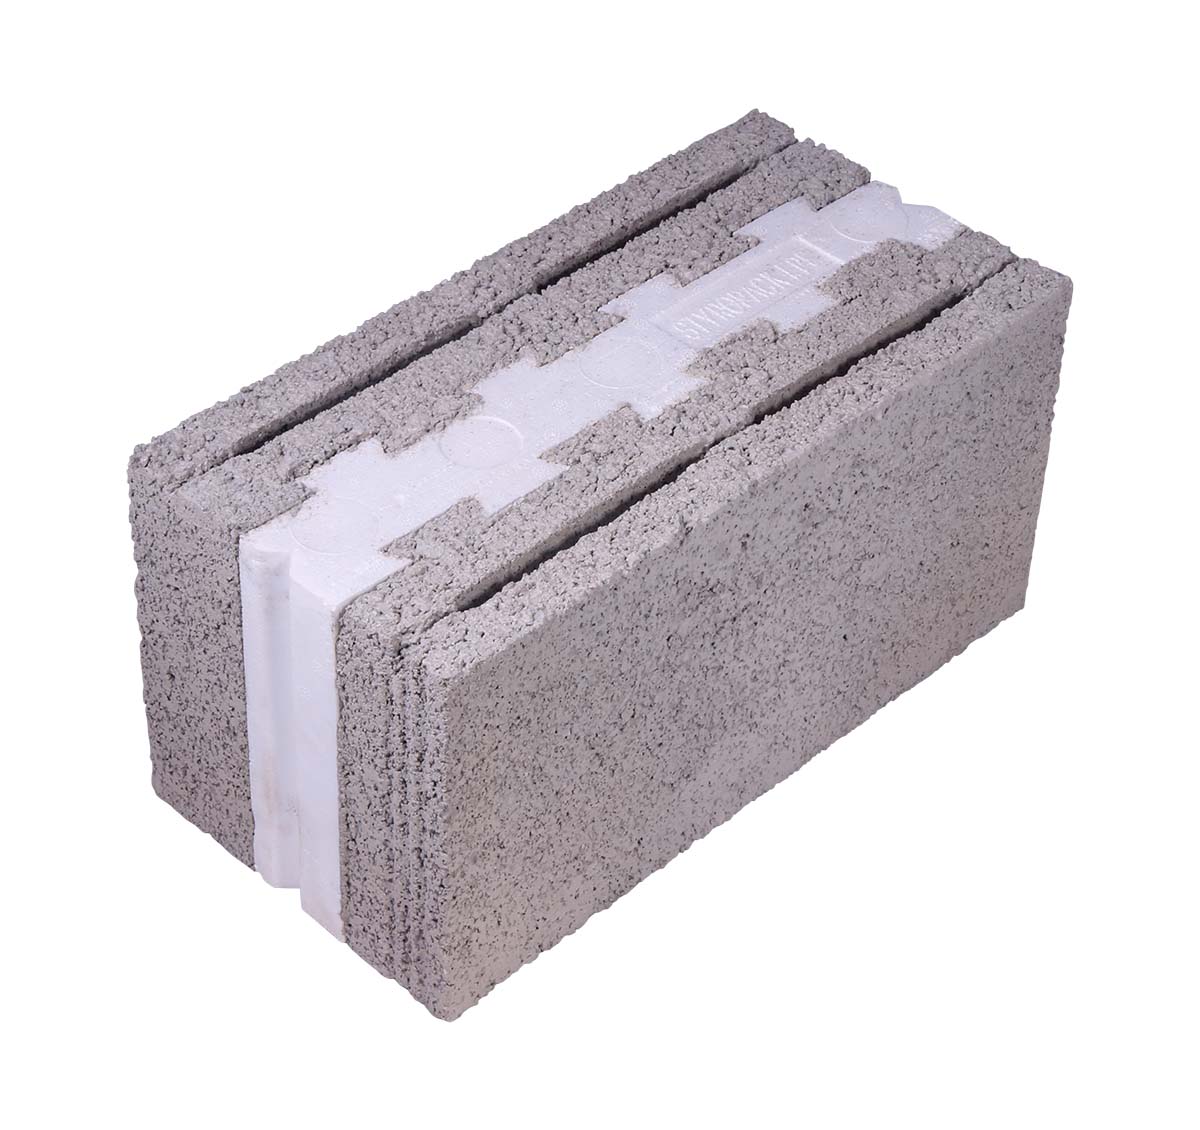 Building Materials | 8 Inch Insulated Concrete Blocks